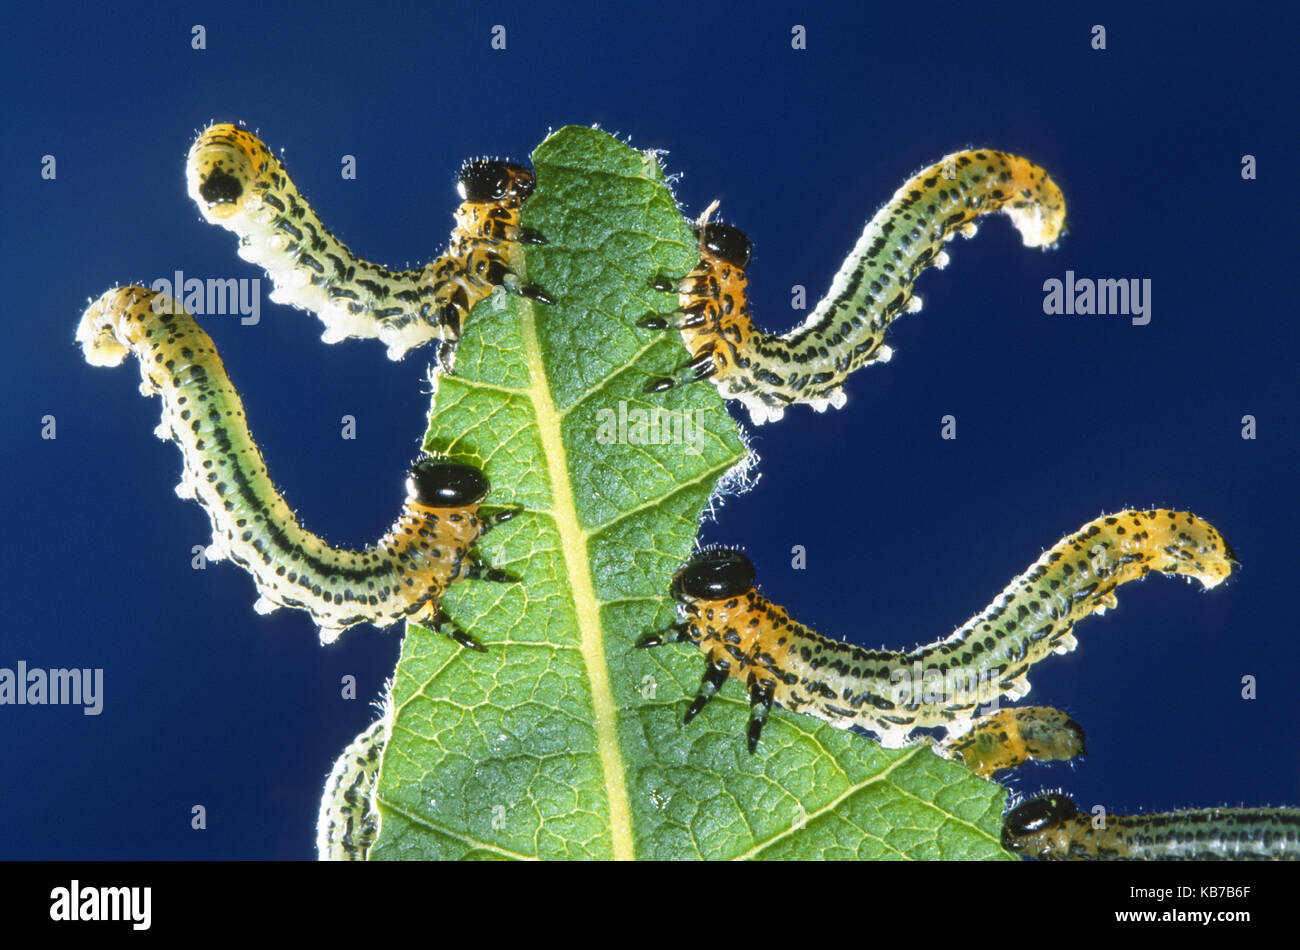 Sawfly (Allantus scrophulariae) larvae feeding on a leaf against a blue background, Belgium Stock Photo